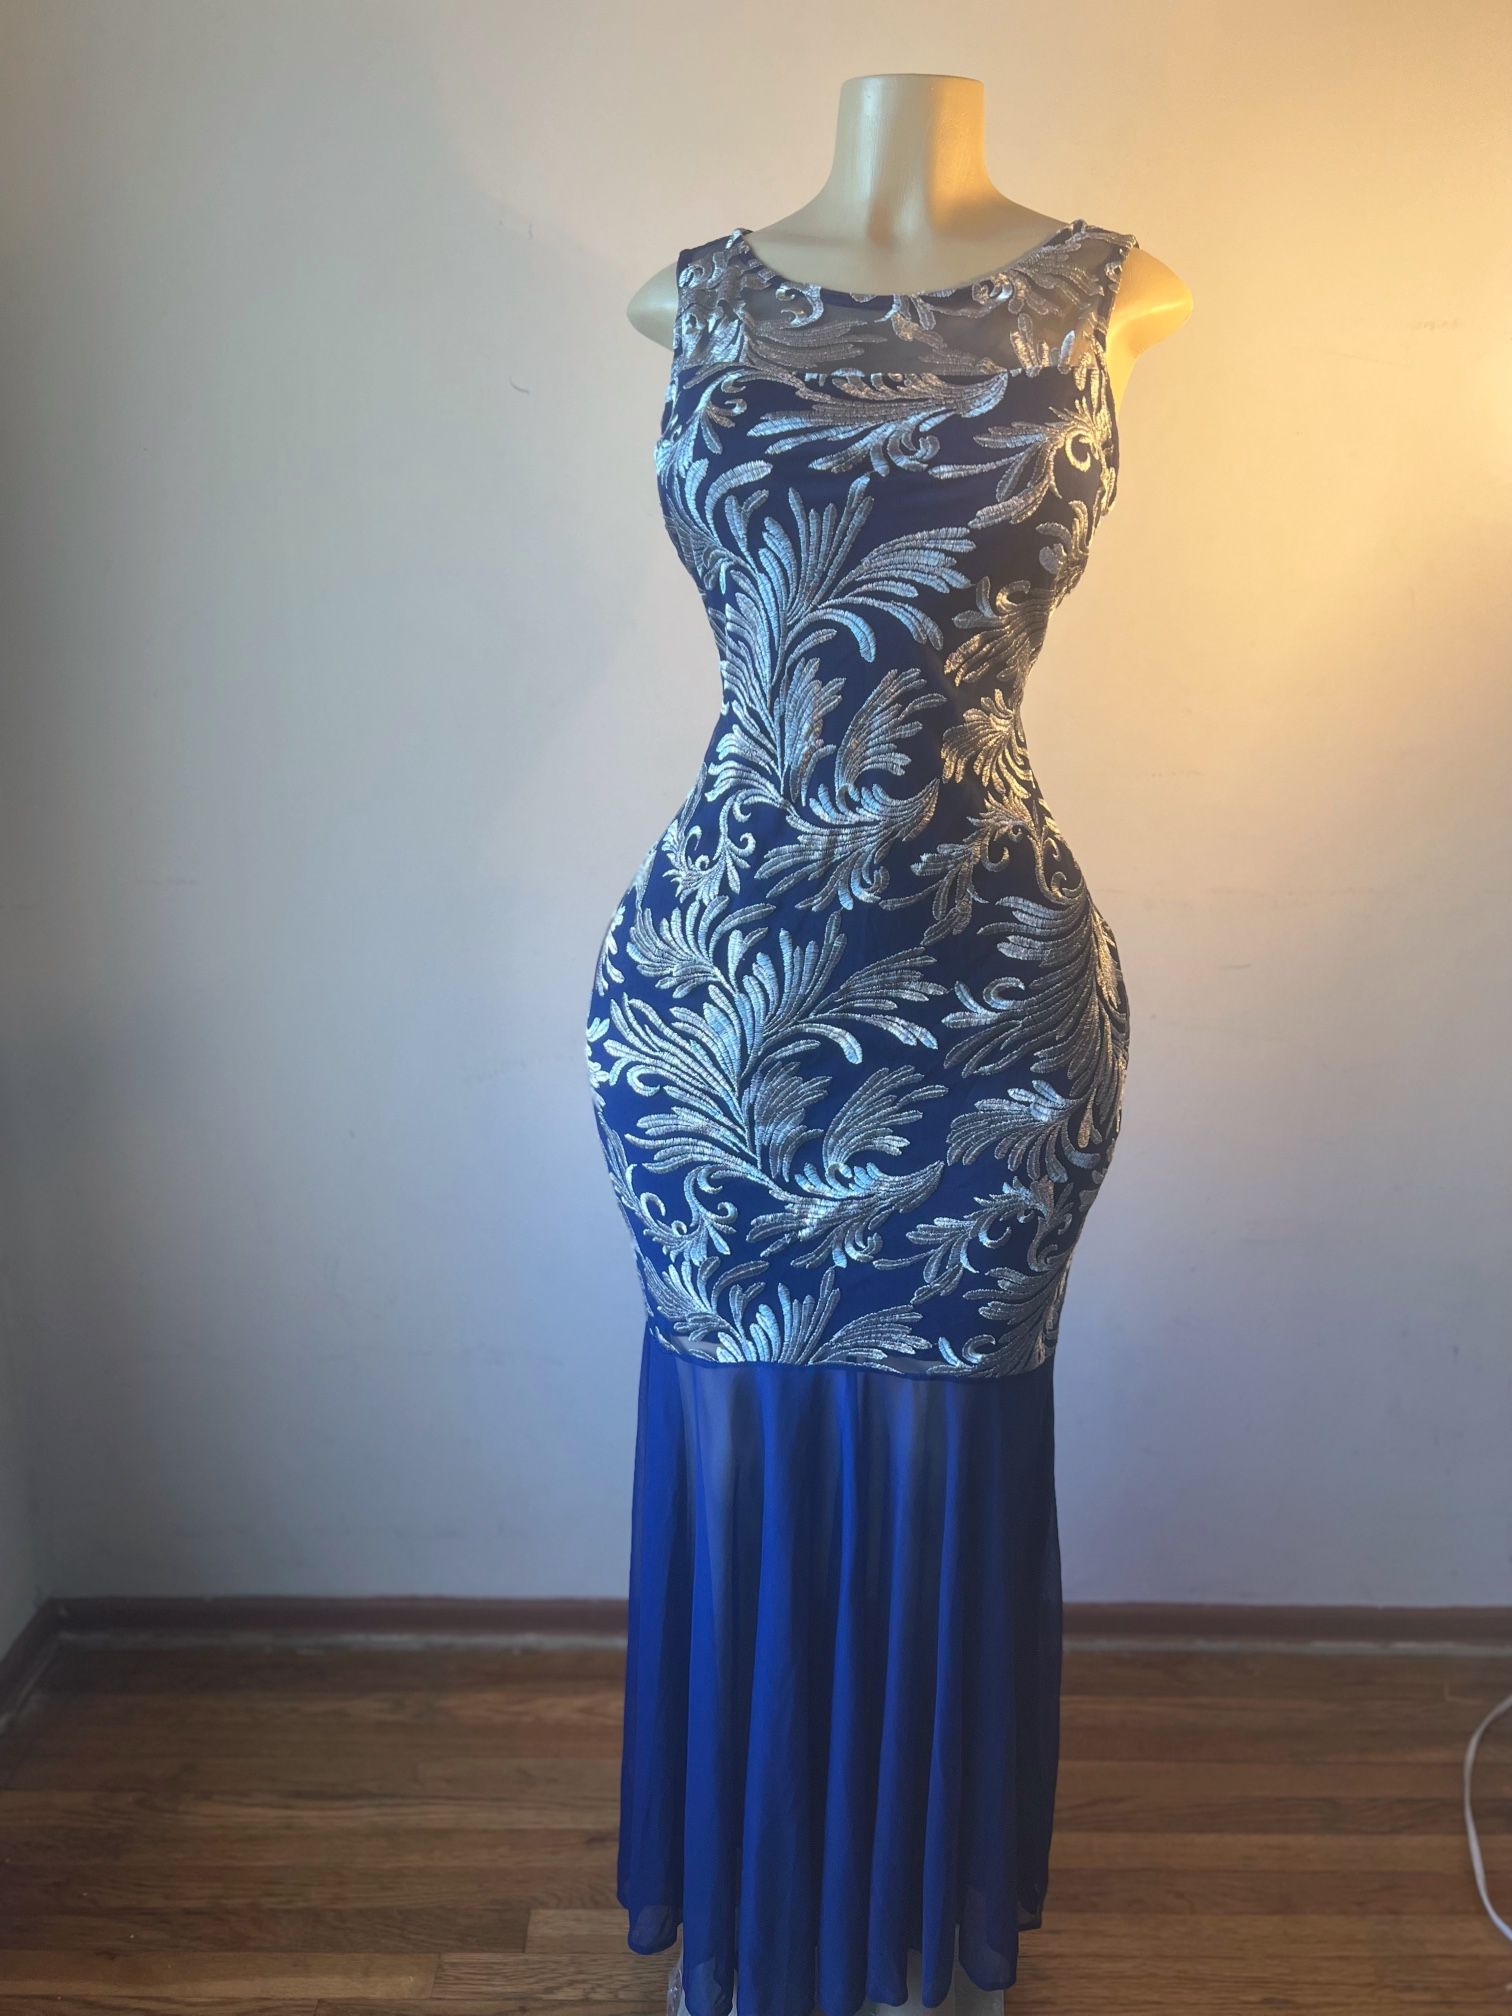 New Blue & Silver Dress Size 6 (Small/Medium)